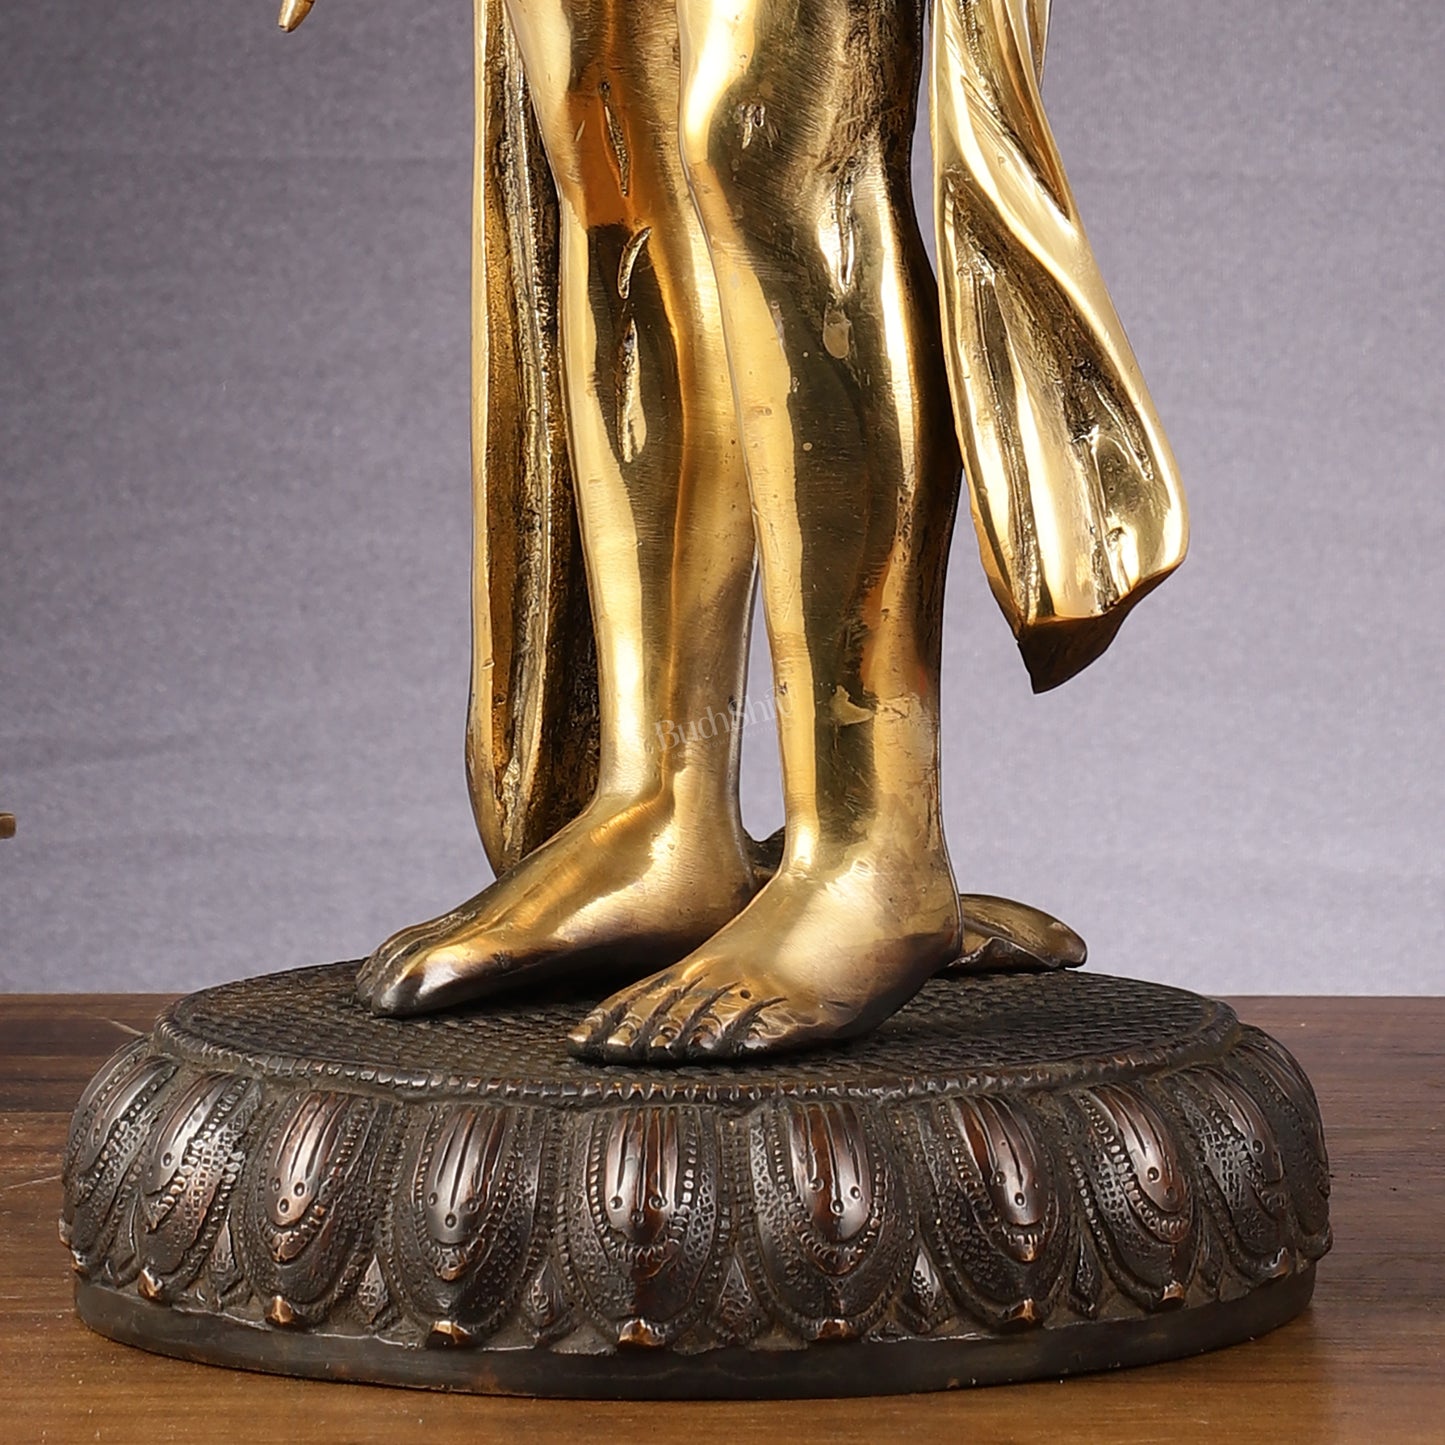 Brass Standing Lord Hanuman idol 24" Height